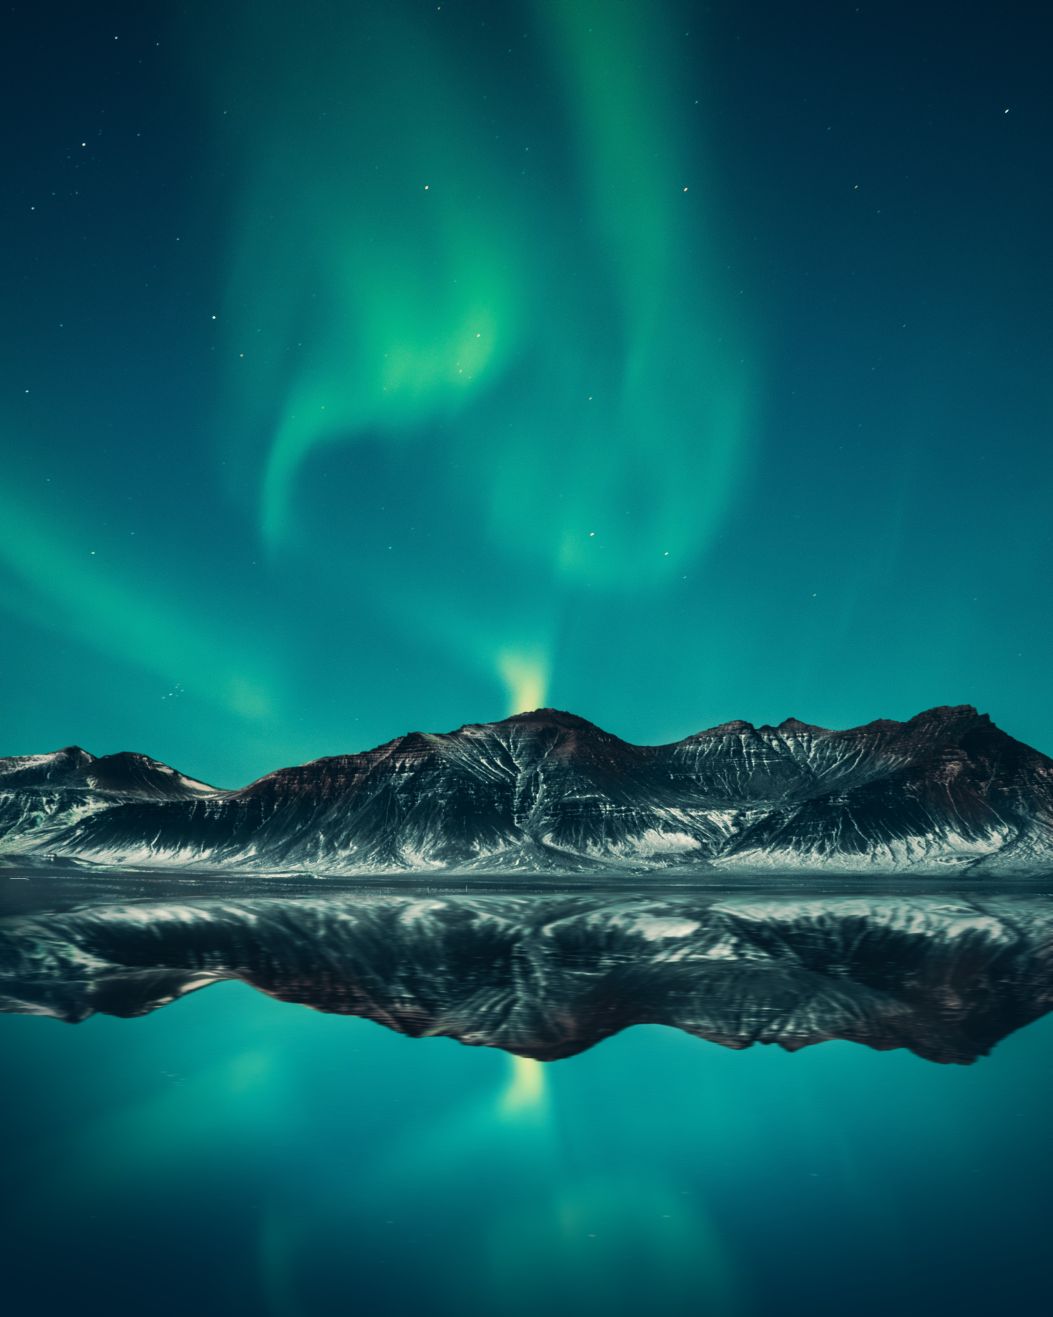 Iceland (Source: Pexels)